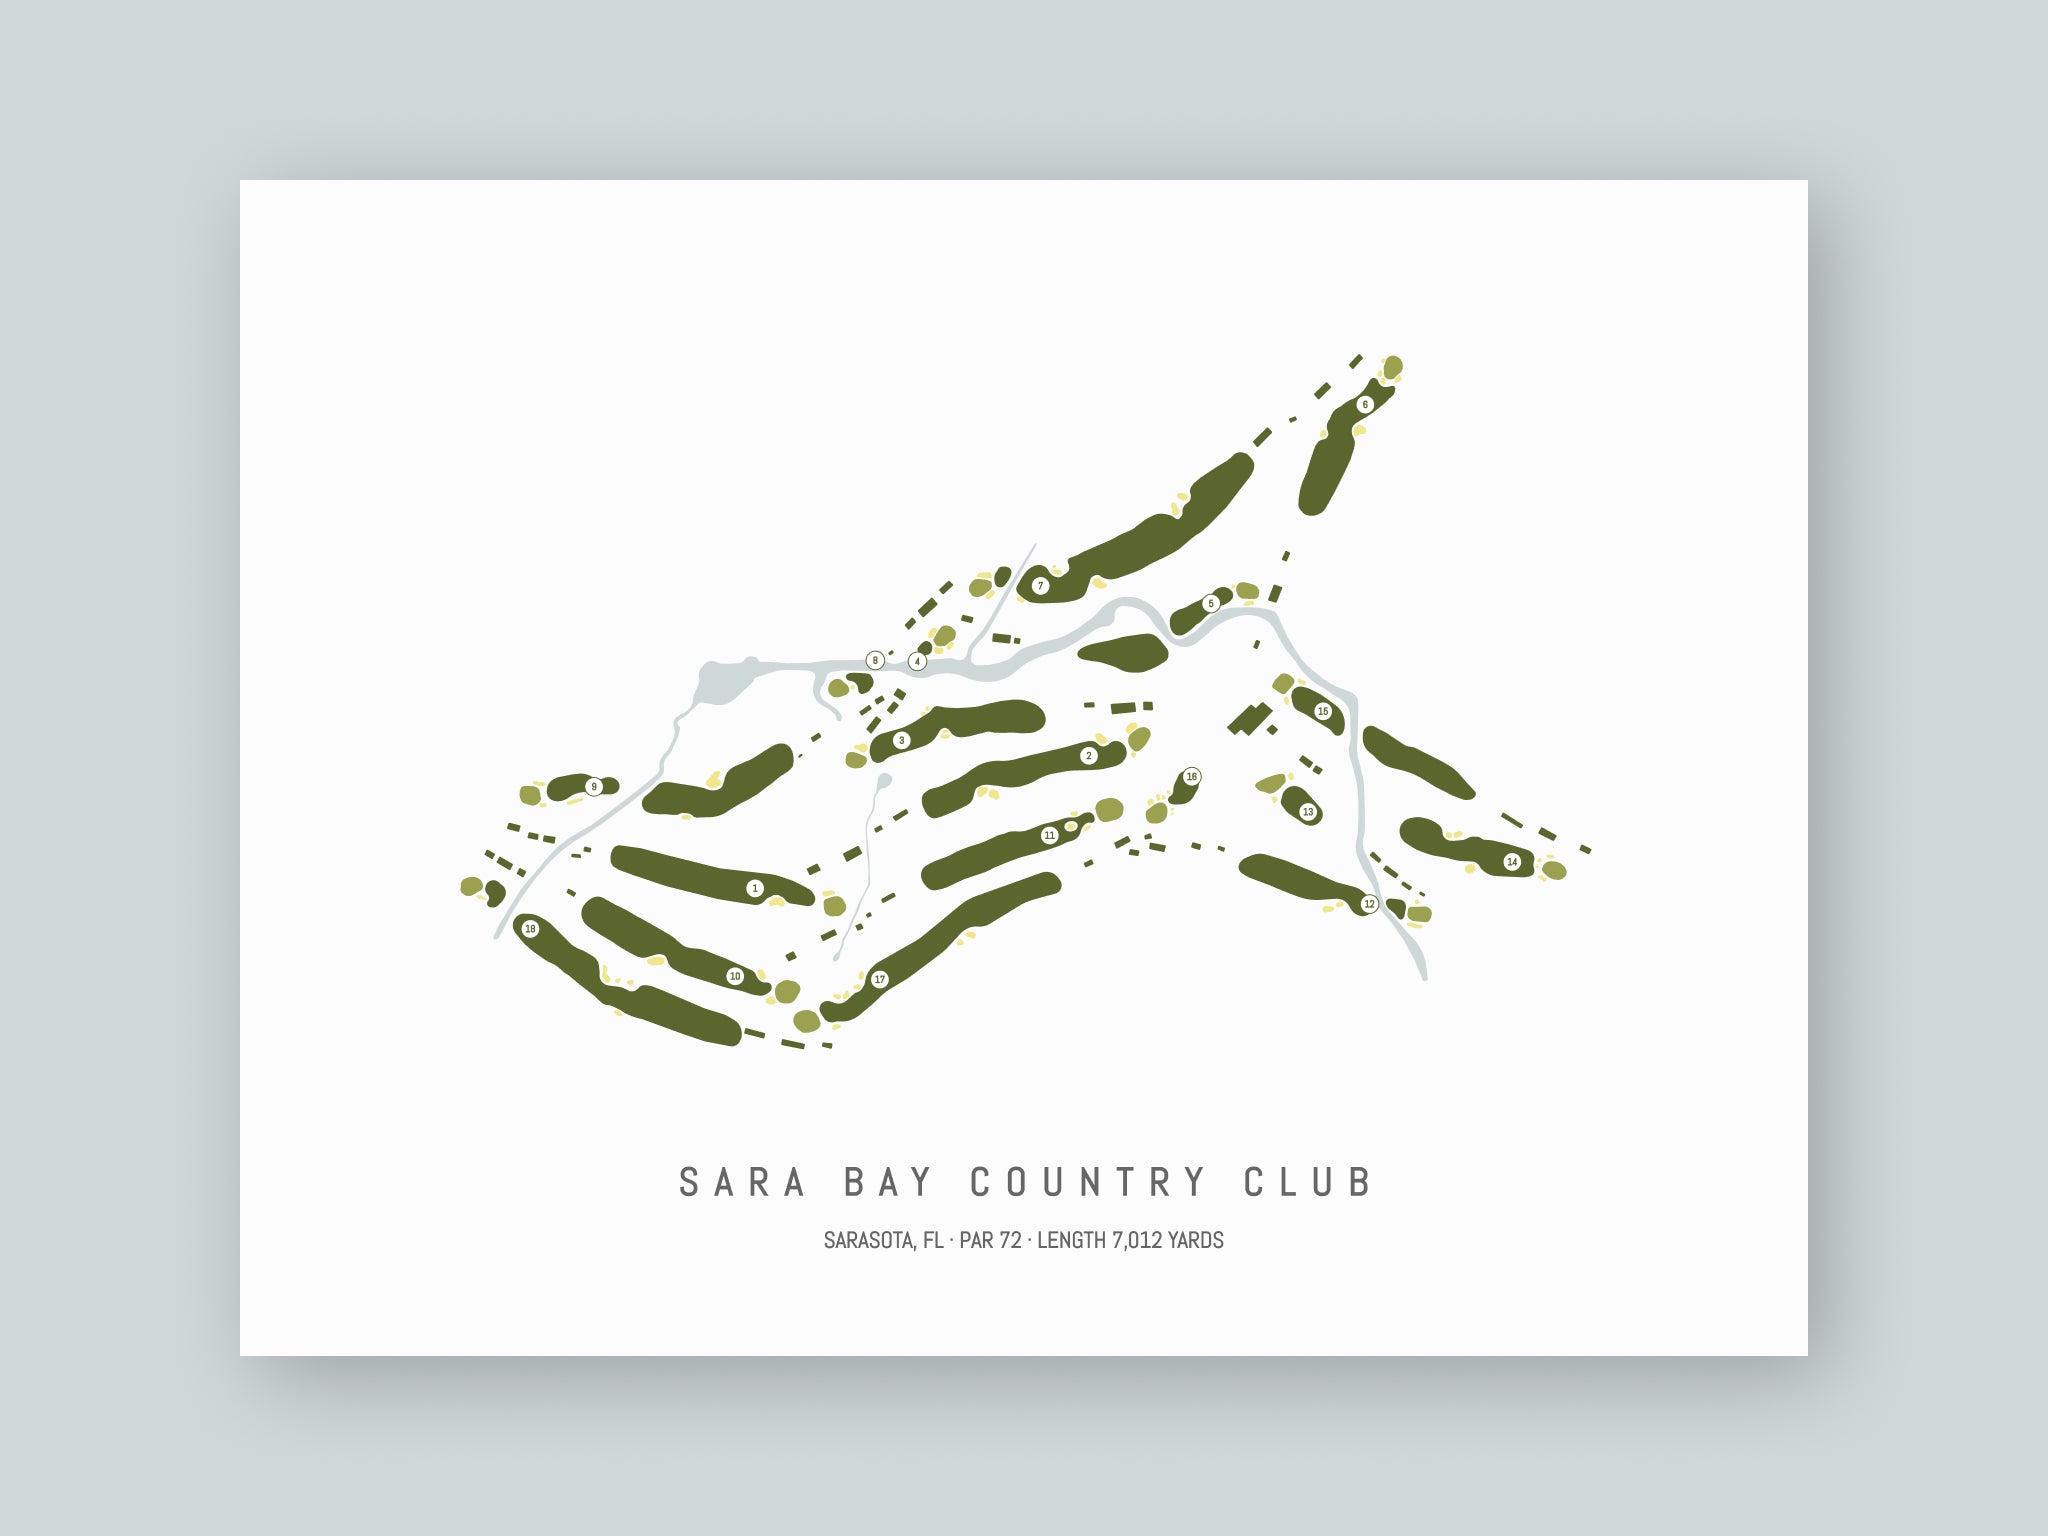 Sara Bay Country Club